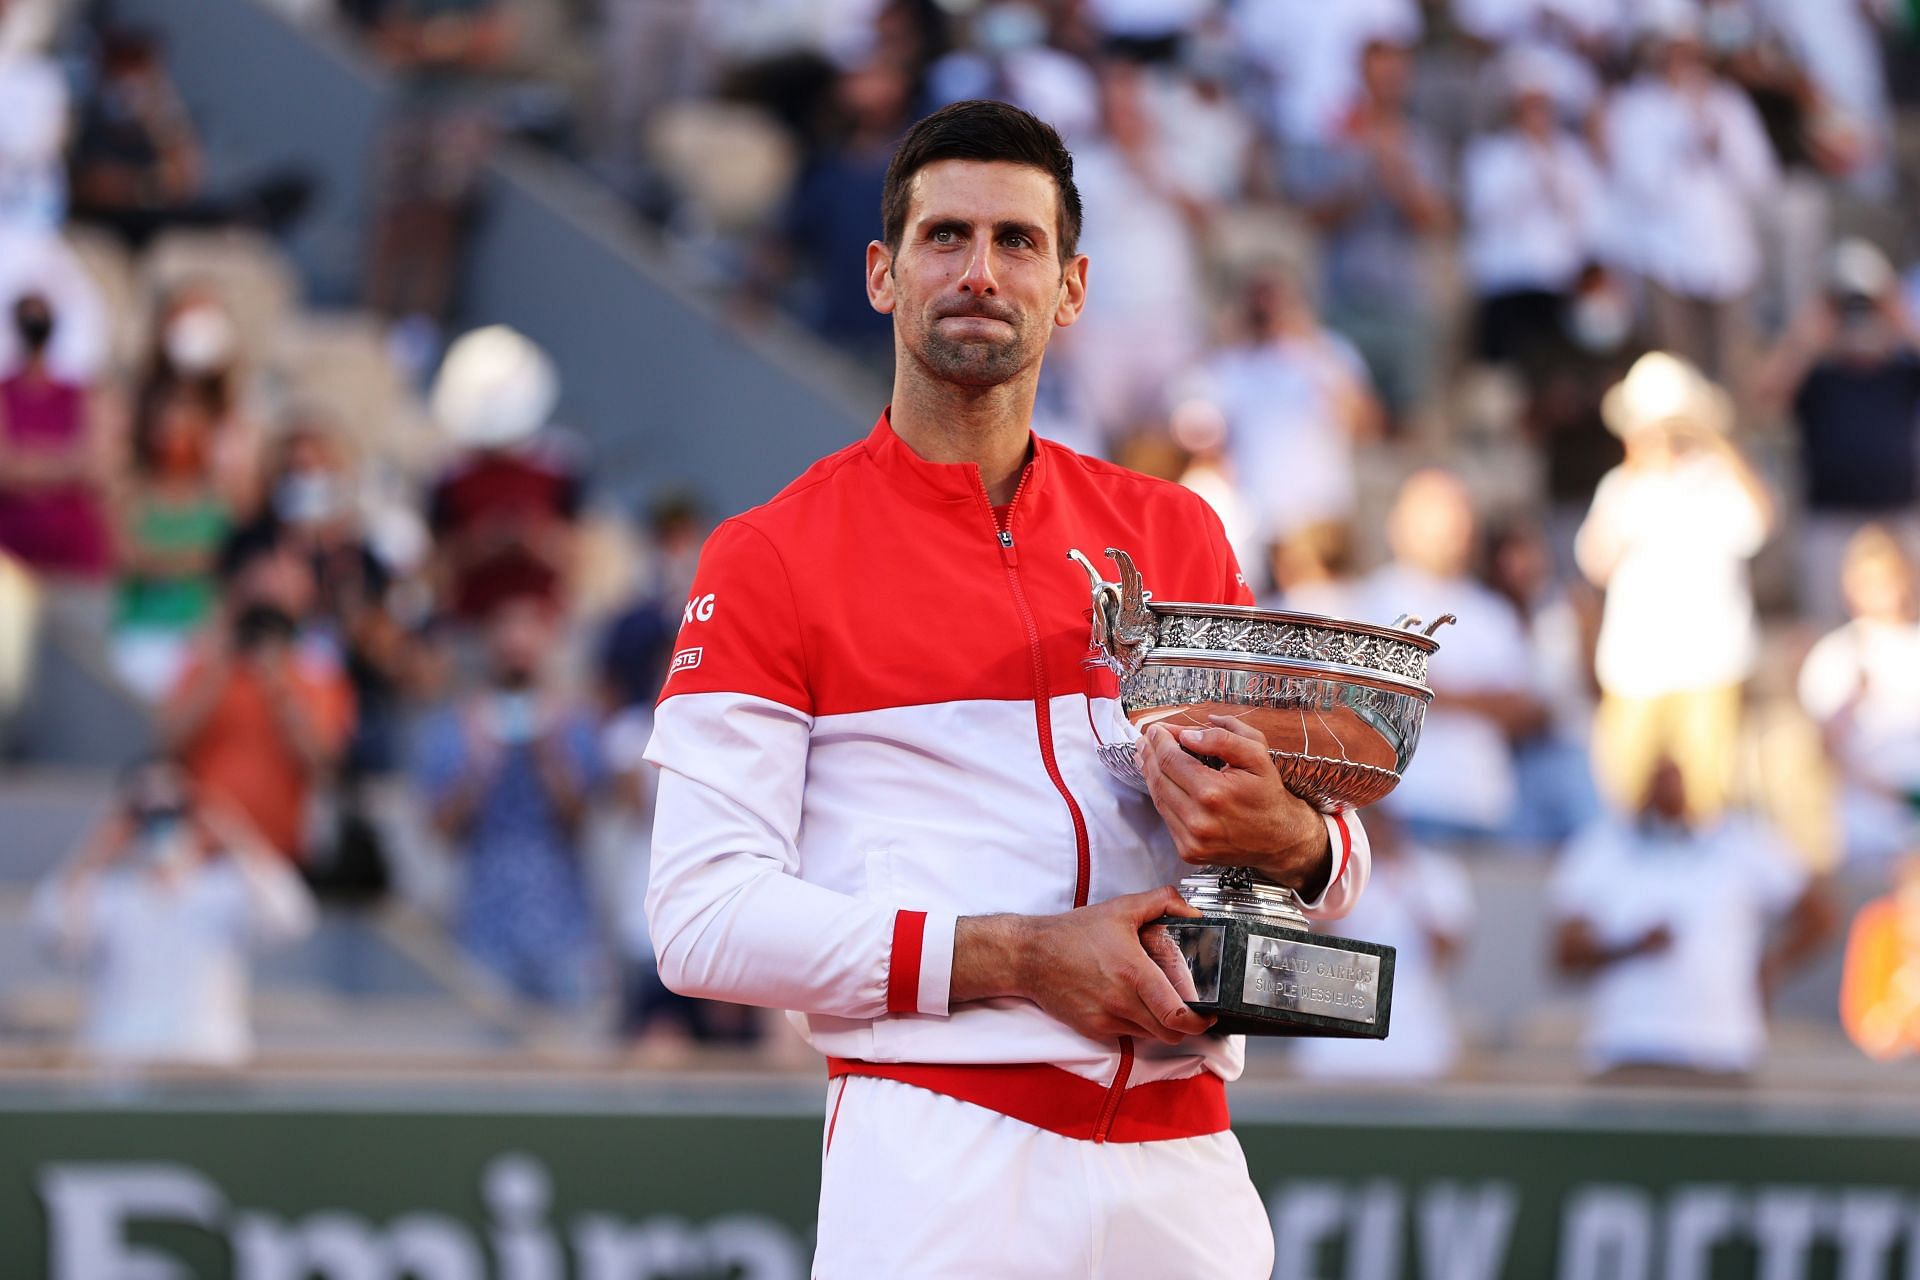 Novak Djokovic is chasing history at Roland Garros this year.